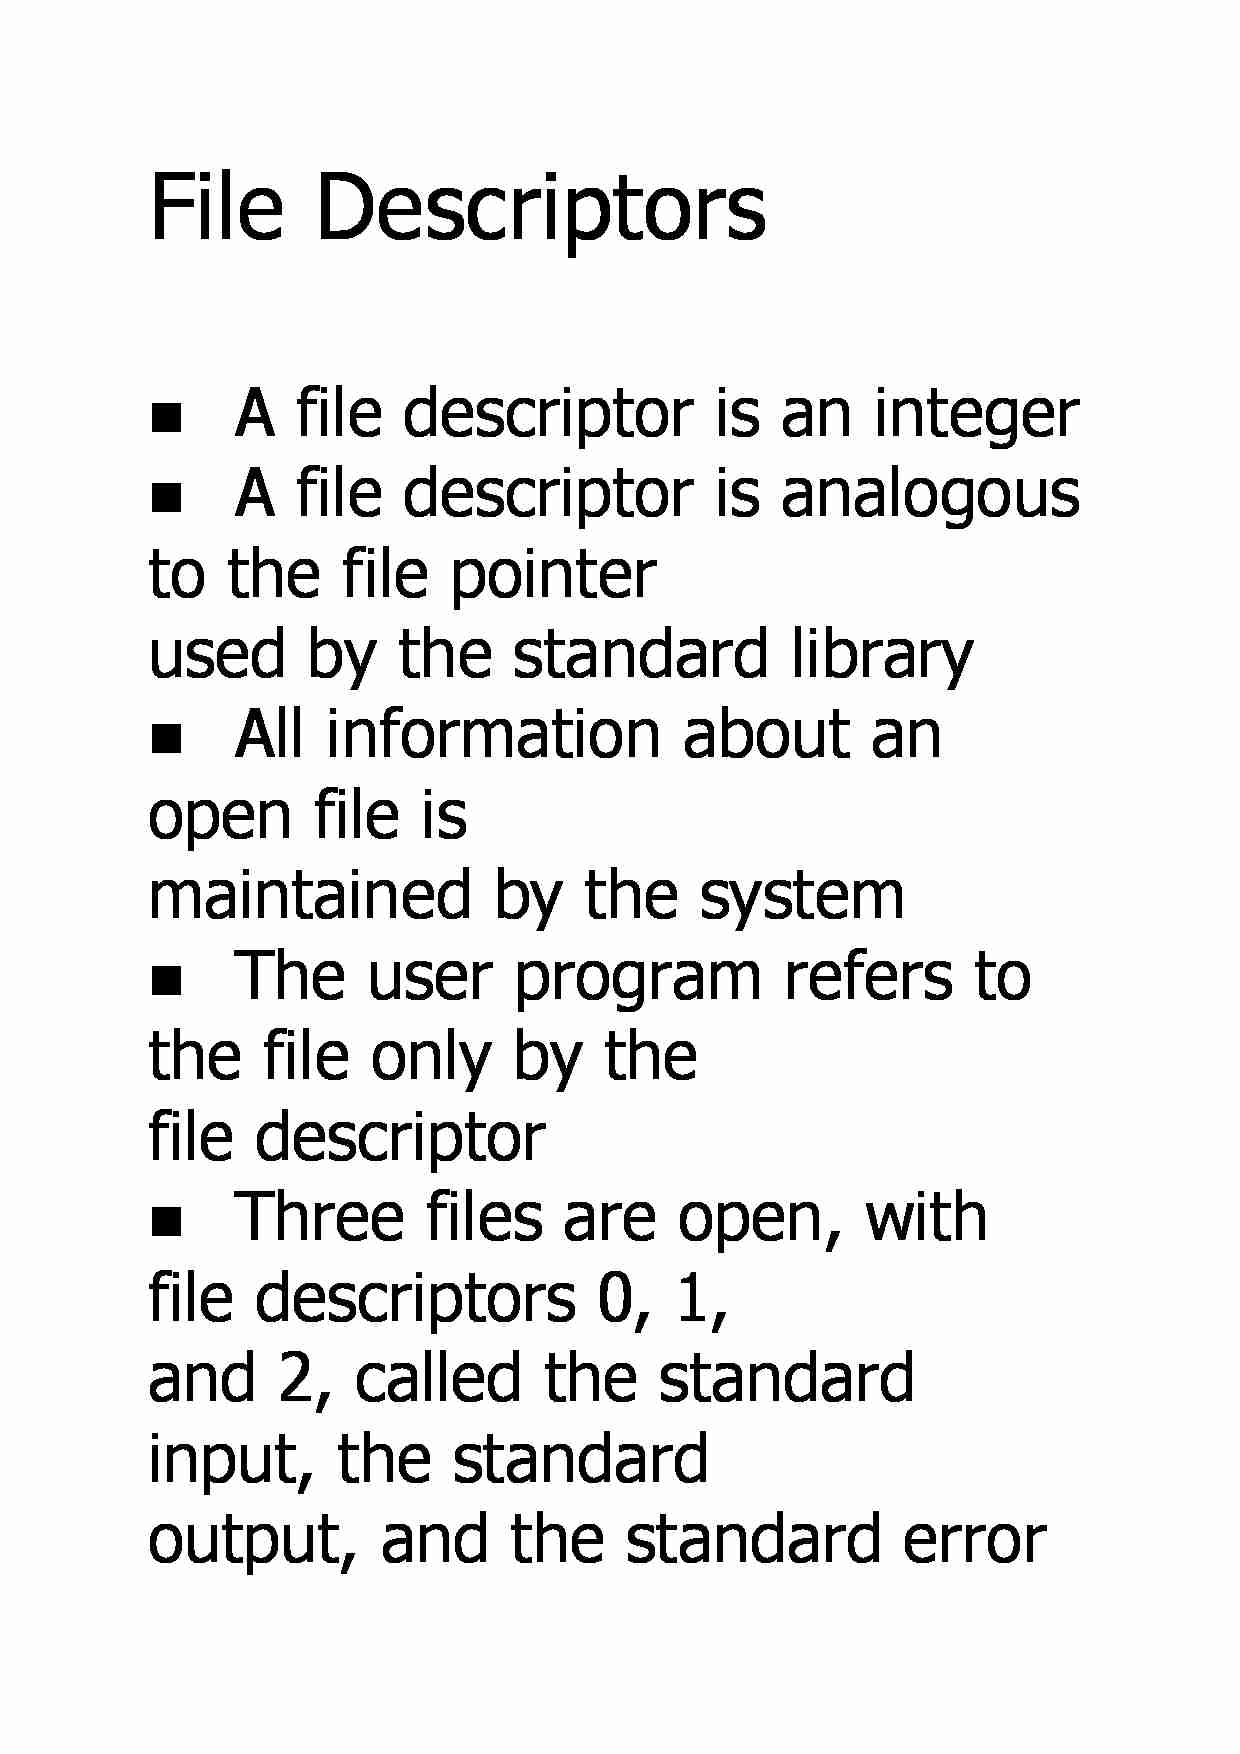 File Descriptors - strona 1